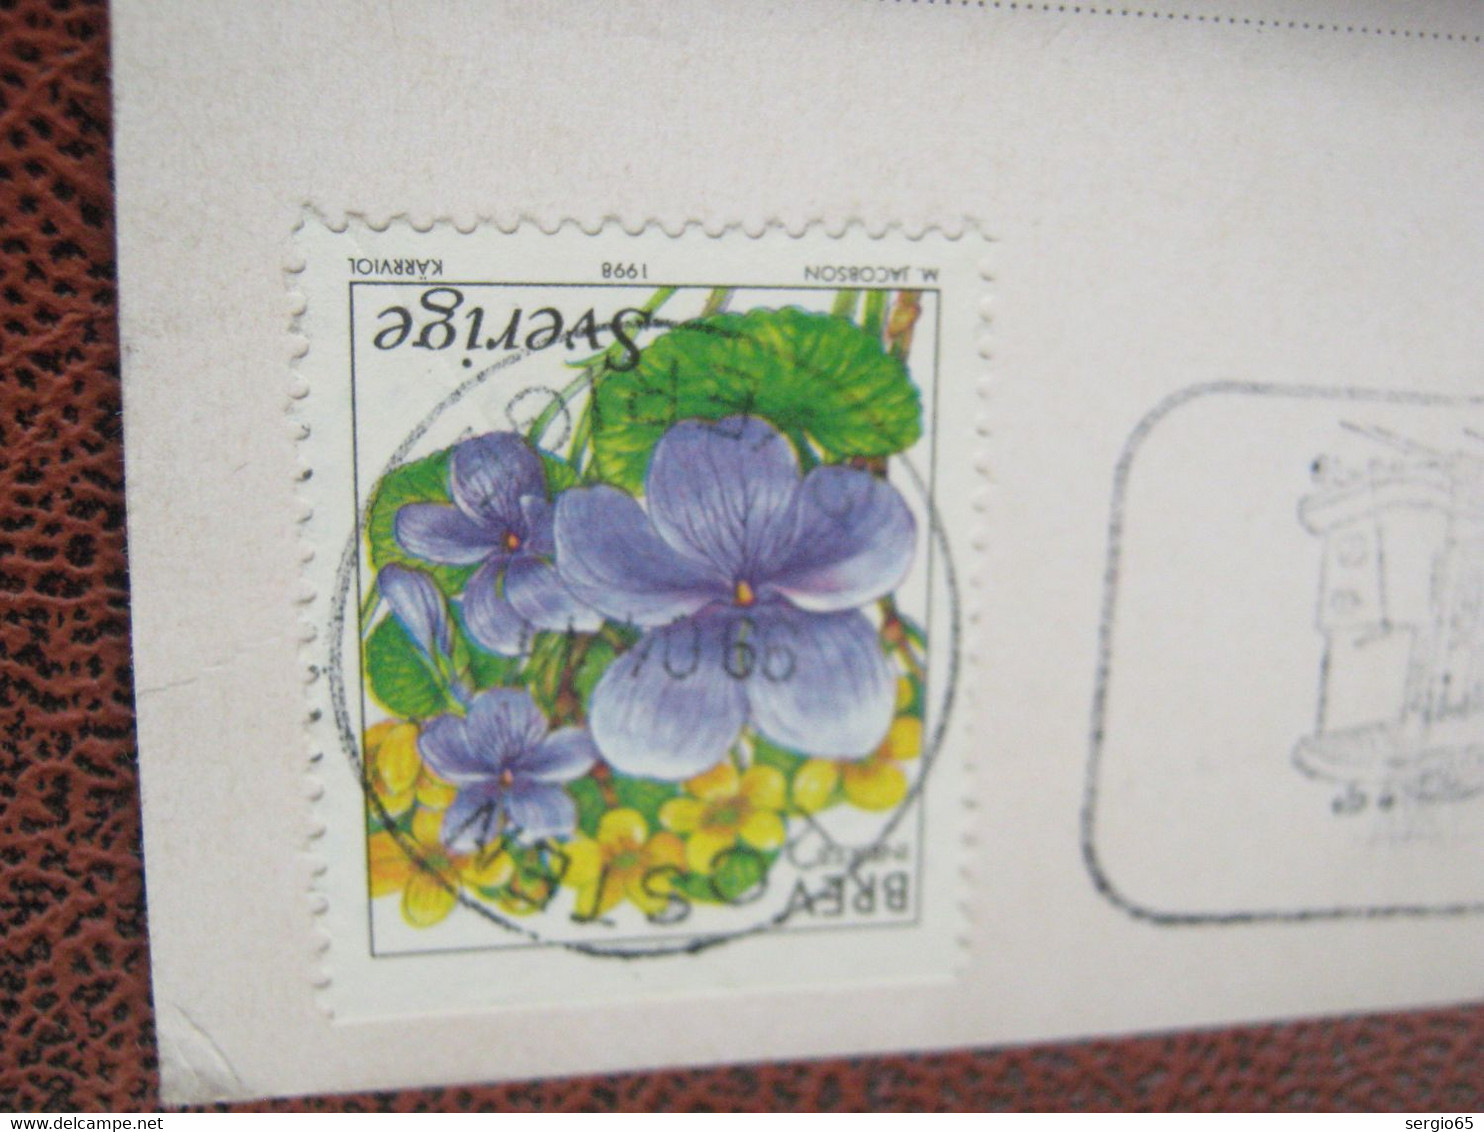 Post Card Traveled 2004th - Briefe U. Dokumente